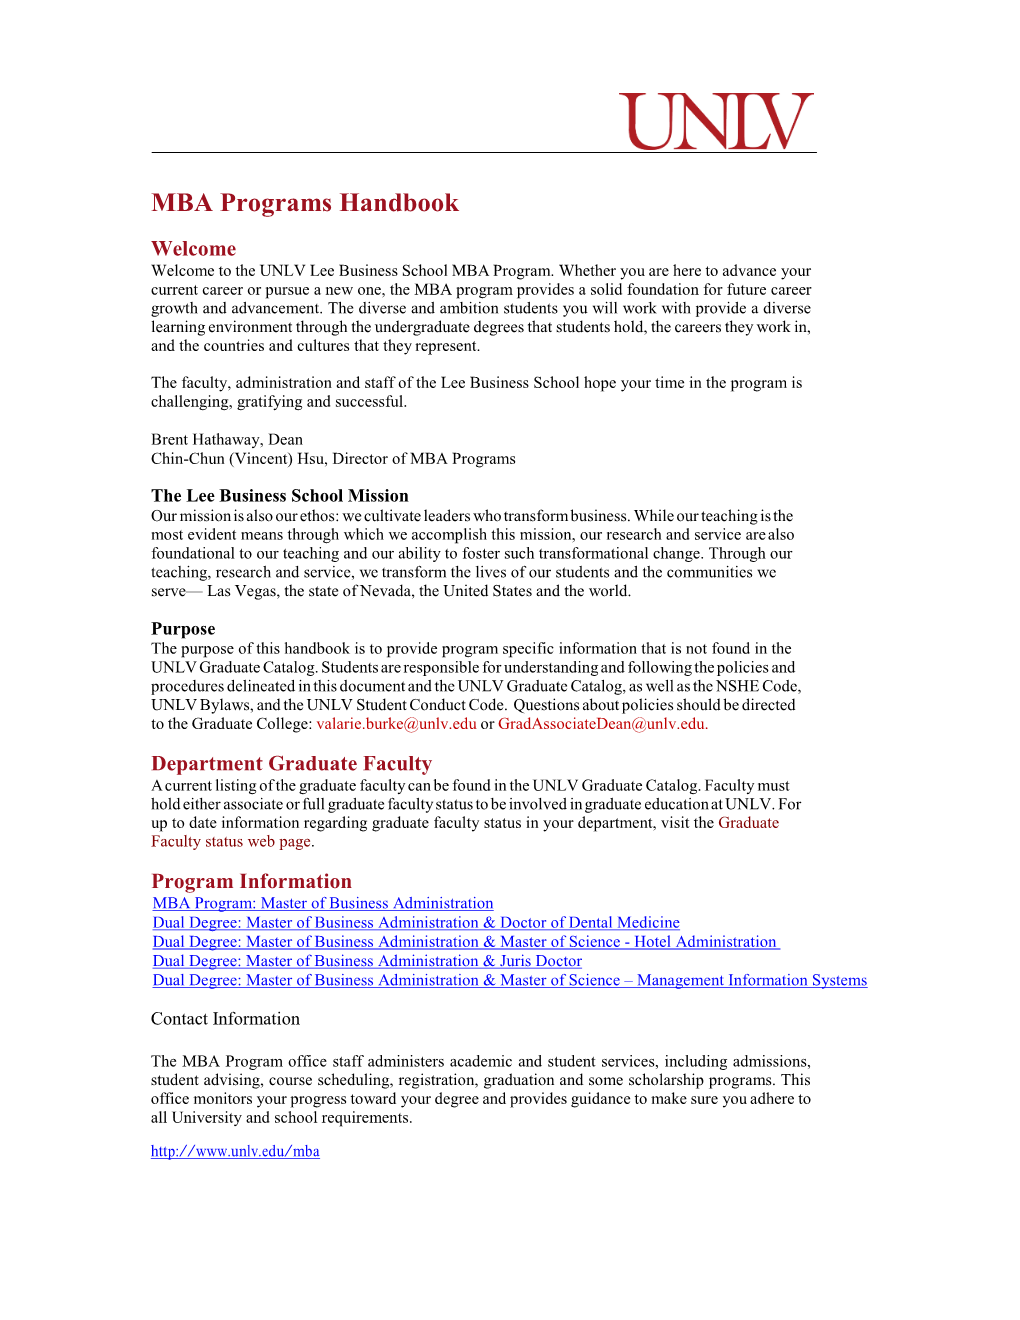 MBA Program Handbook